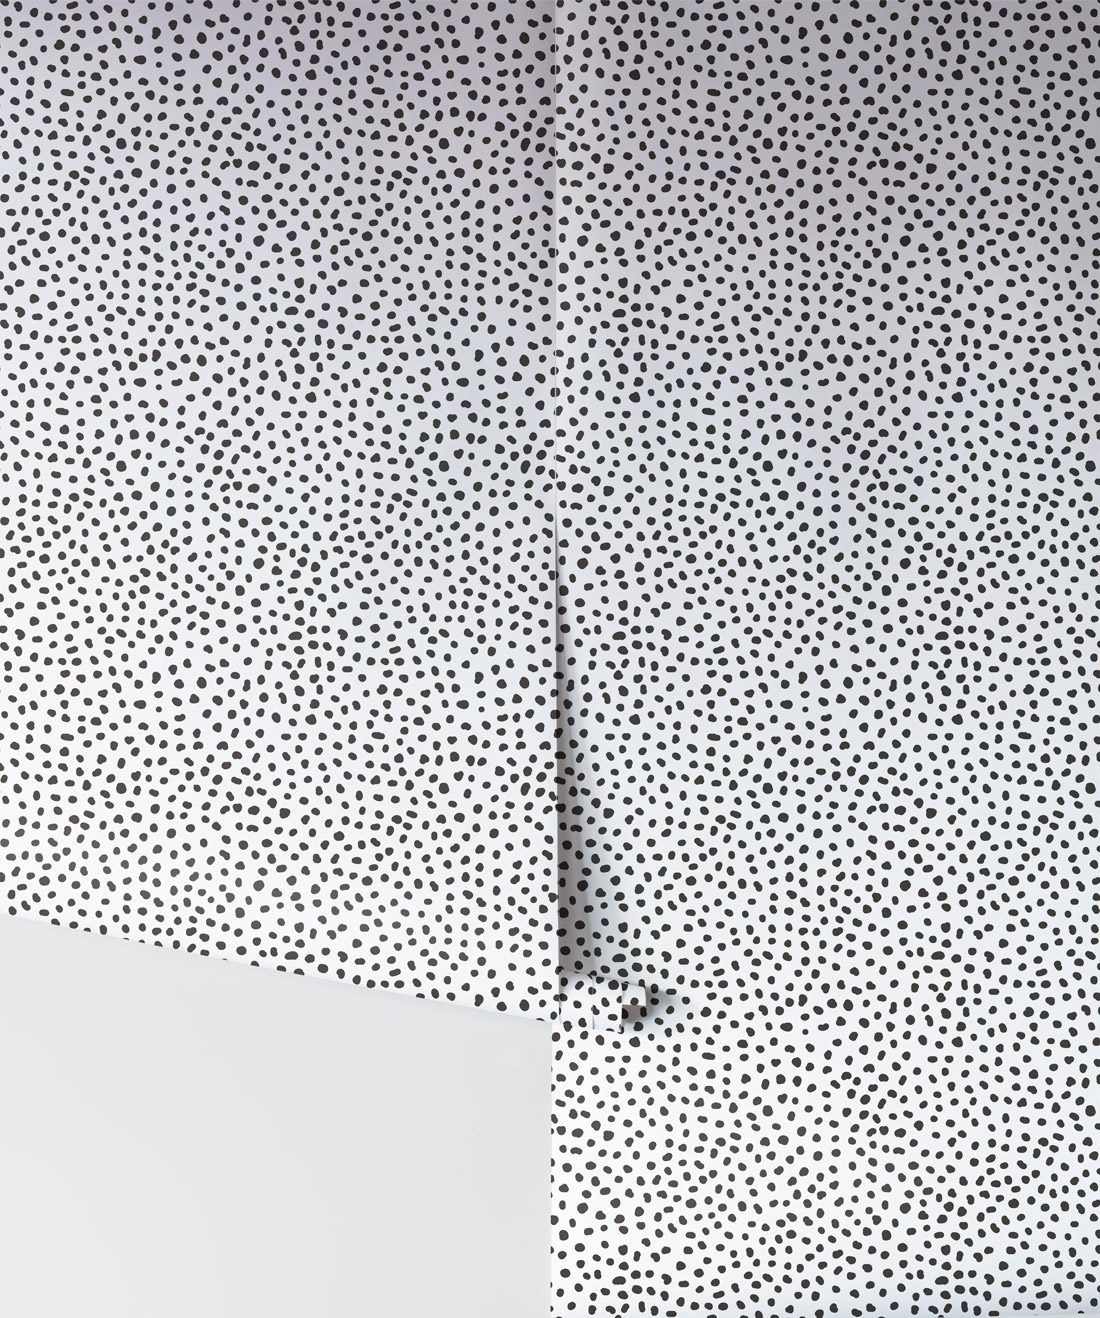 Huddy's Dots • Muddy • Spotted Wallpaper • Roll